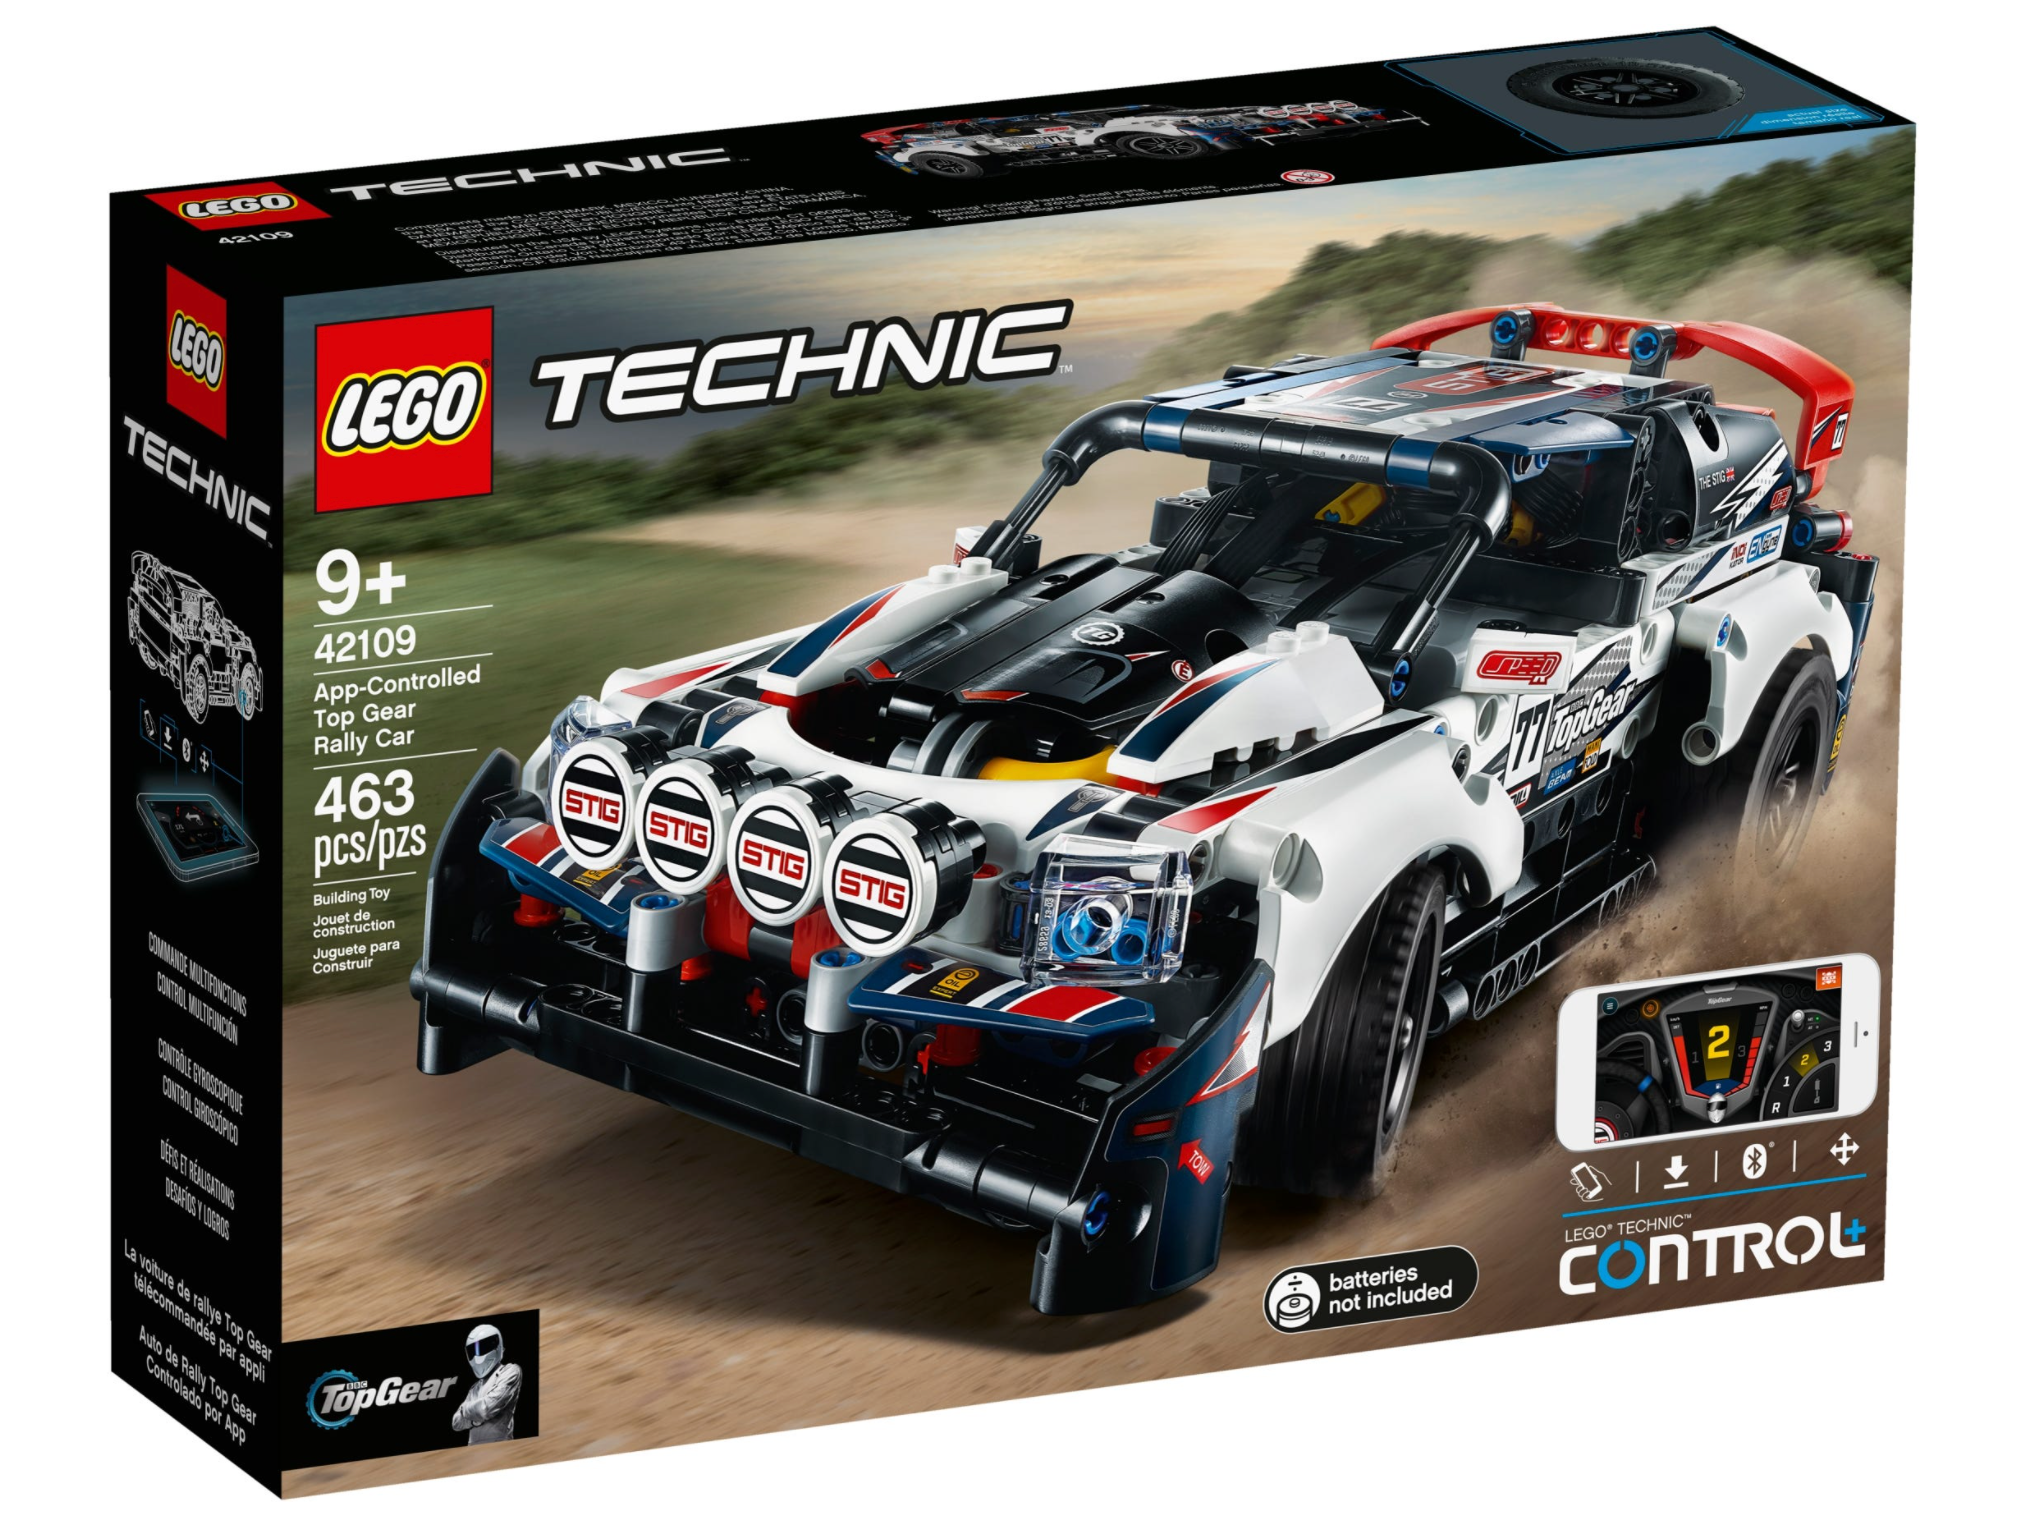 LEGO: Technic - App-Controlled Top Gear Rally Car